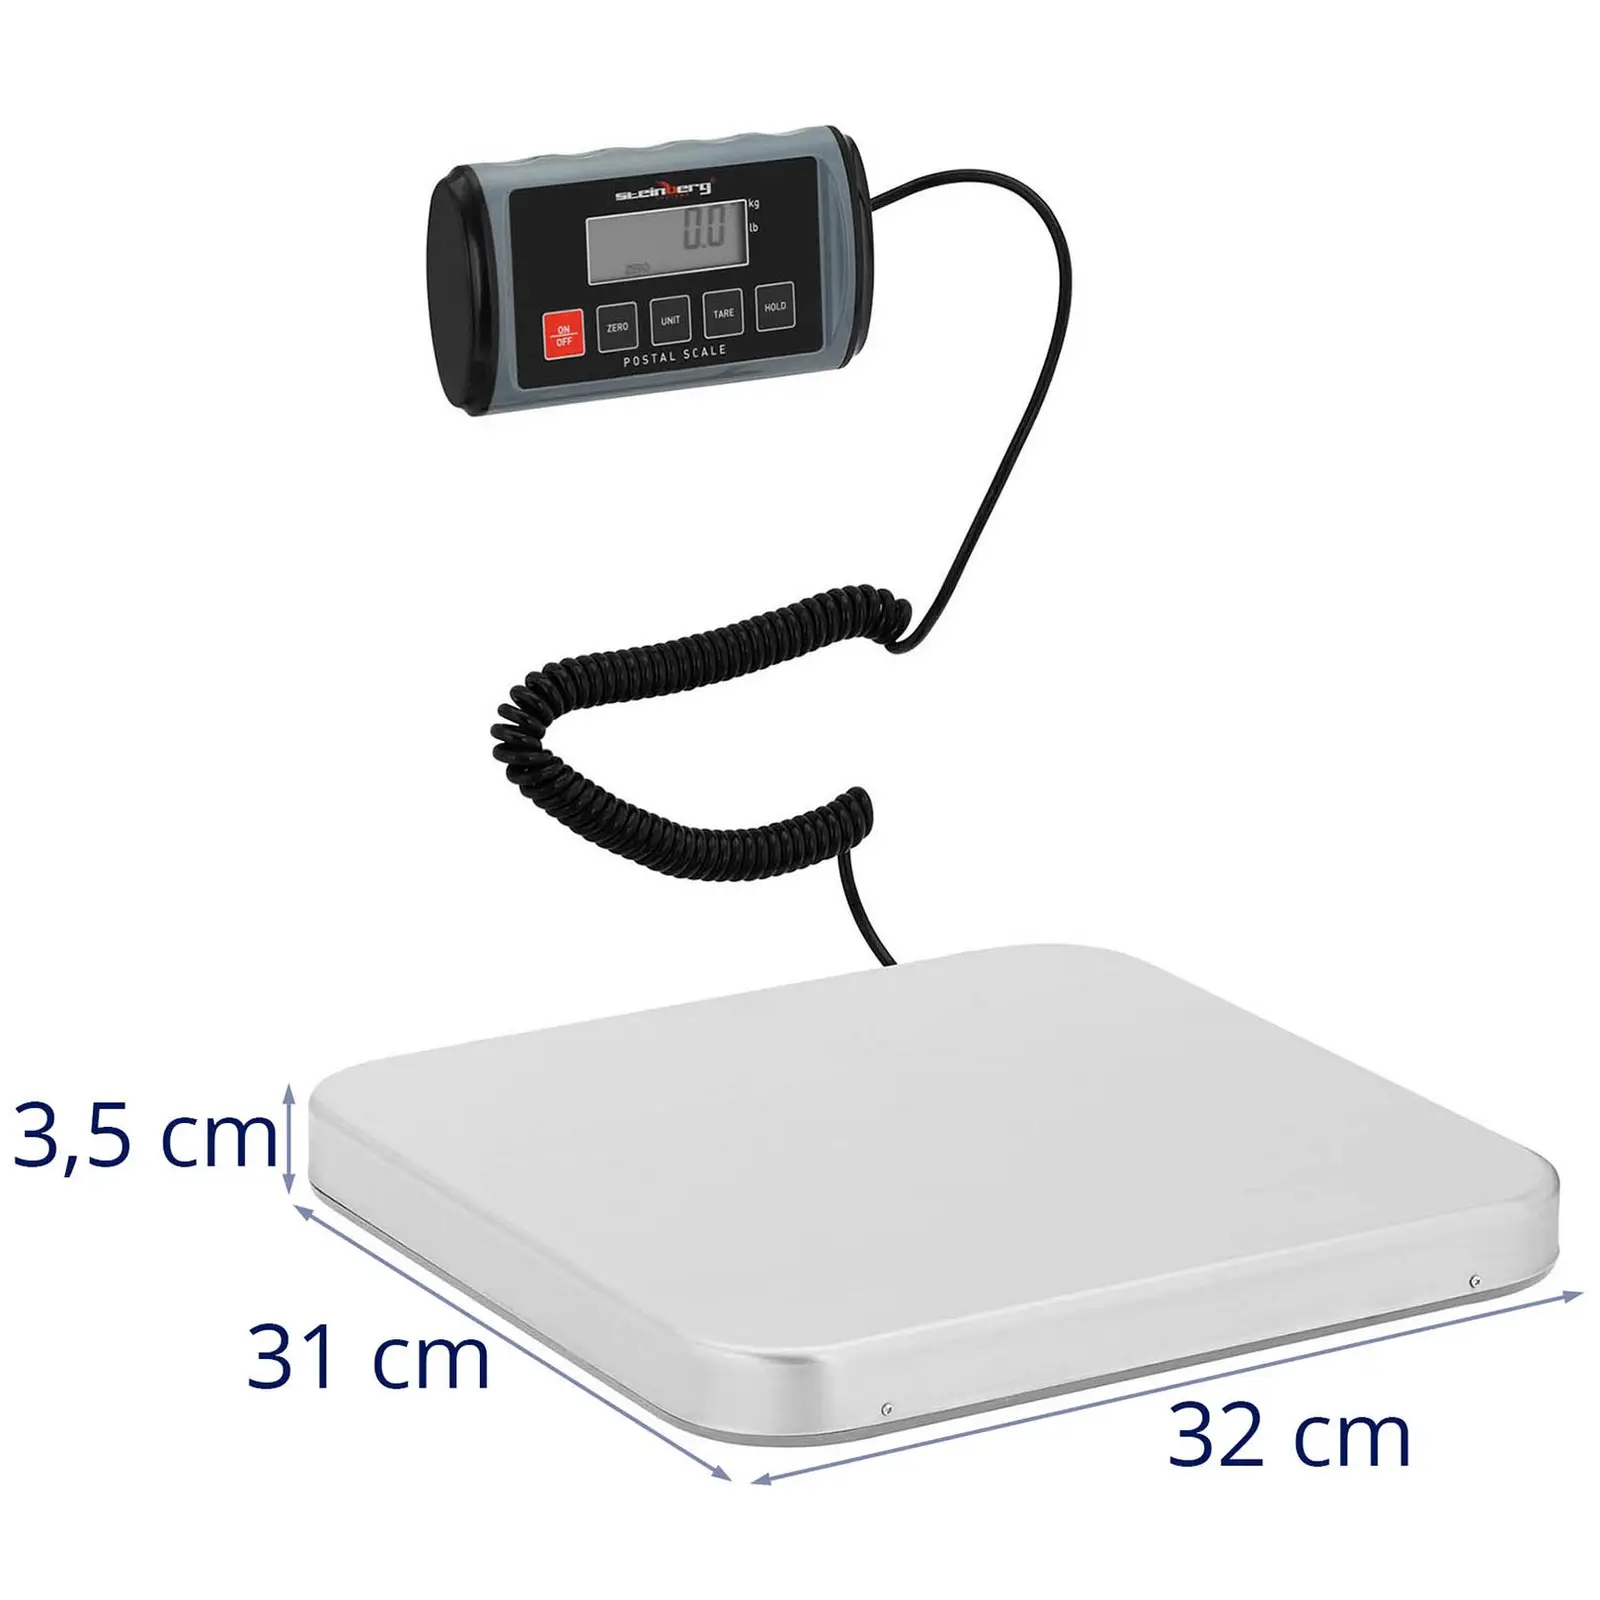 Pakettivaaka - 200 kg / 0,1 kg - 31 x 32 cm - ulkoinen LCD-näyttö